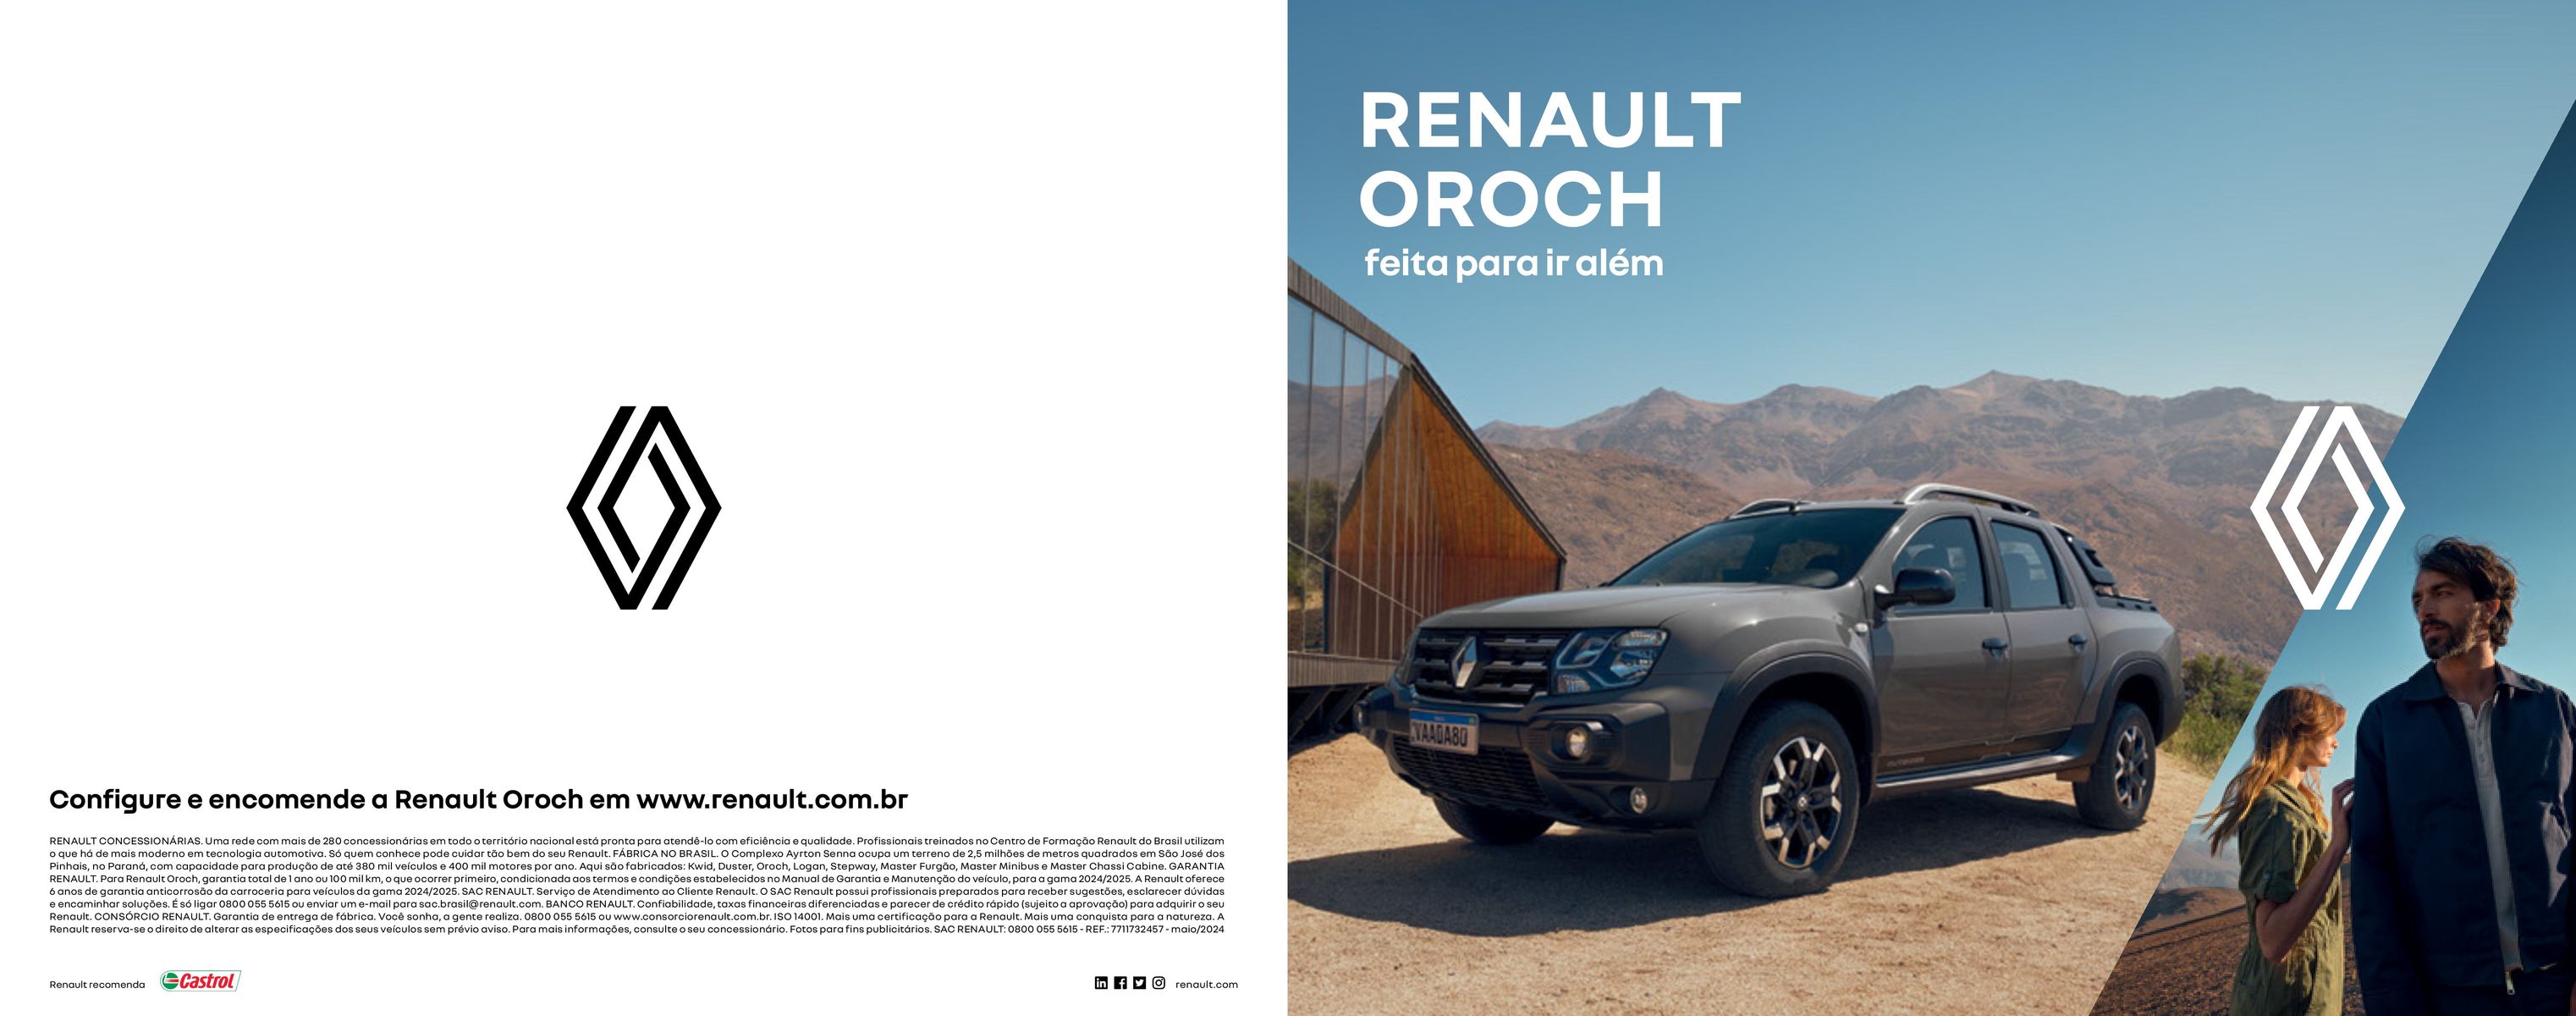 Renault Oroch em Destaque